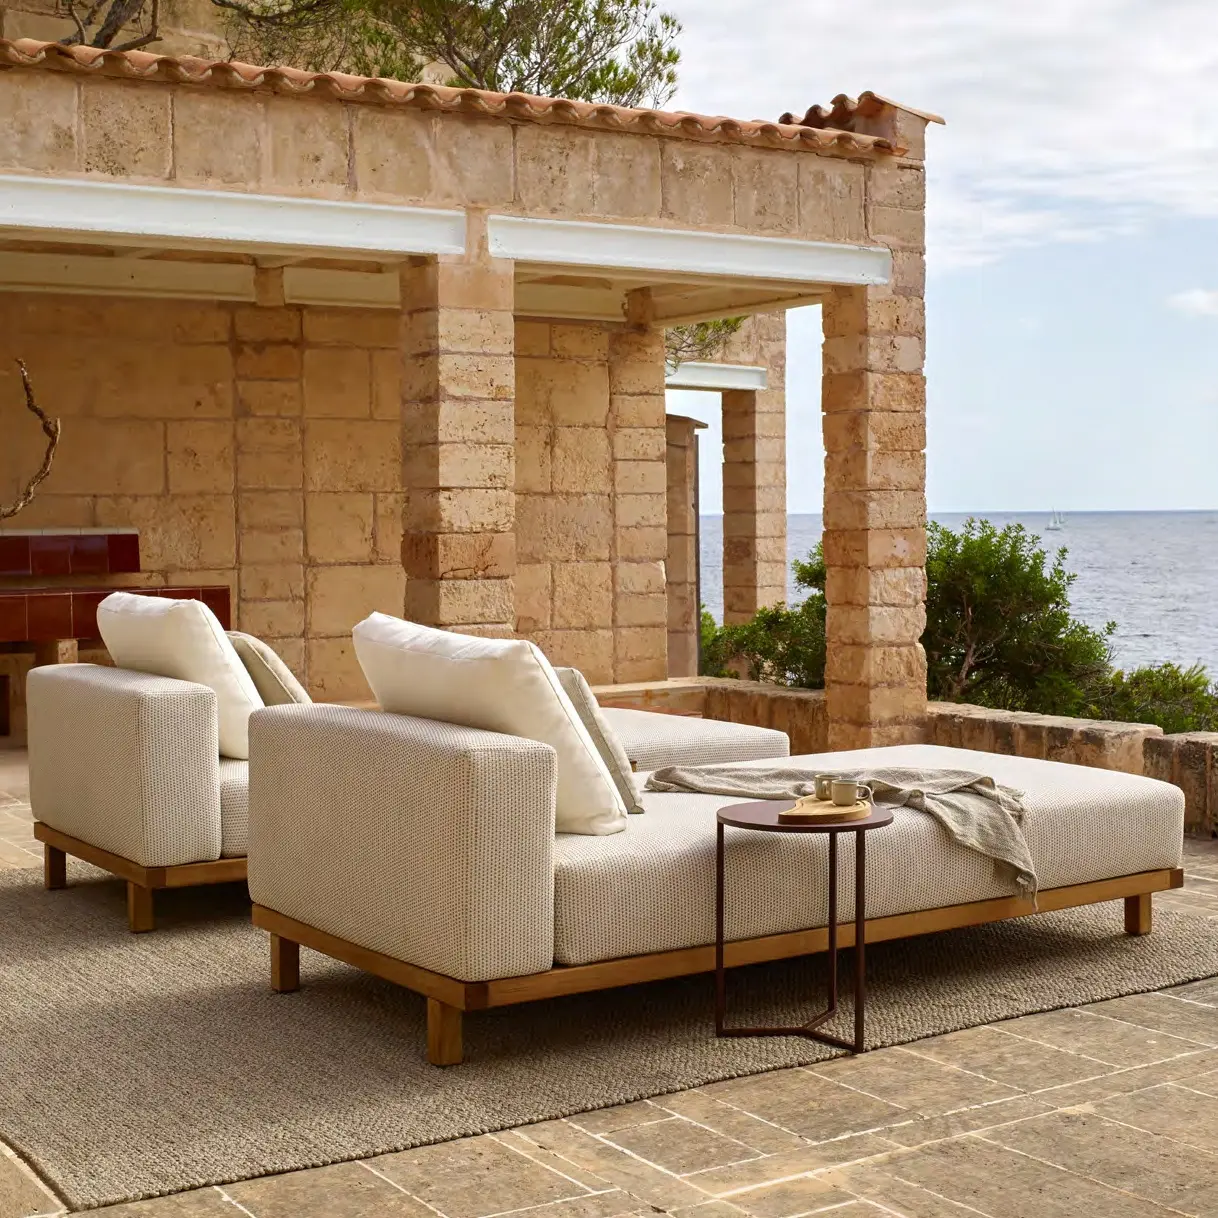 Luxus outdoor-teak holz pool garten strand chaiselongue sonne bett daybed